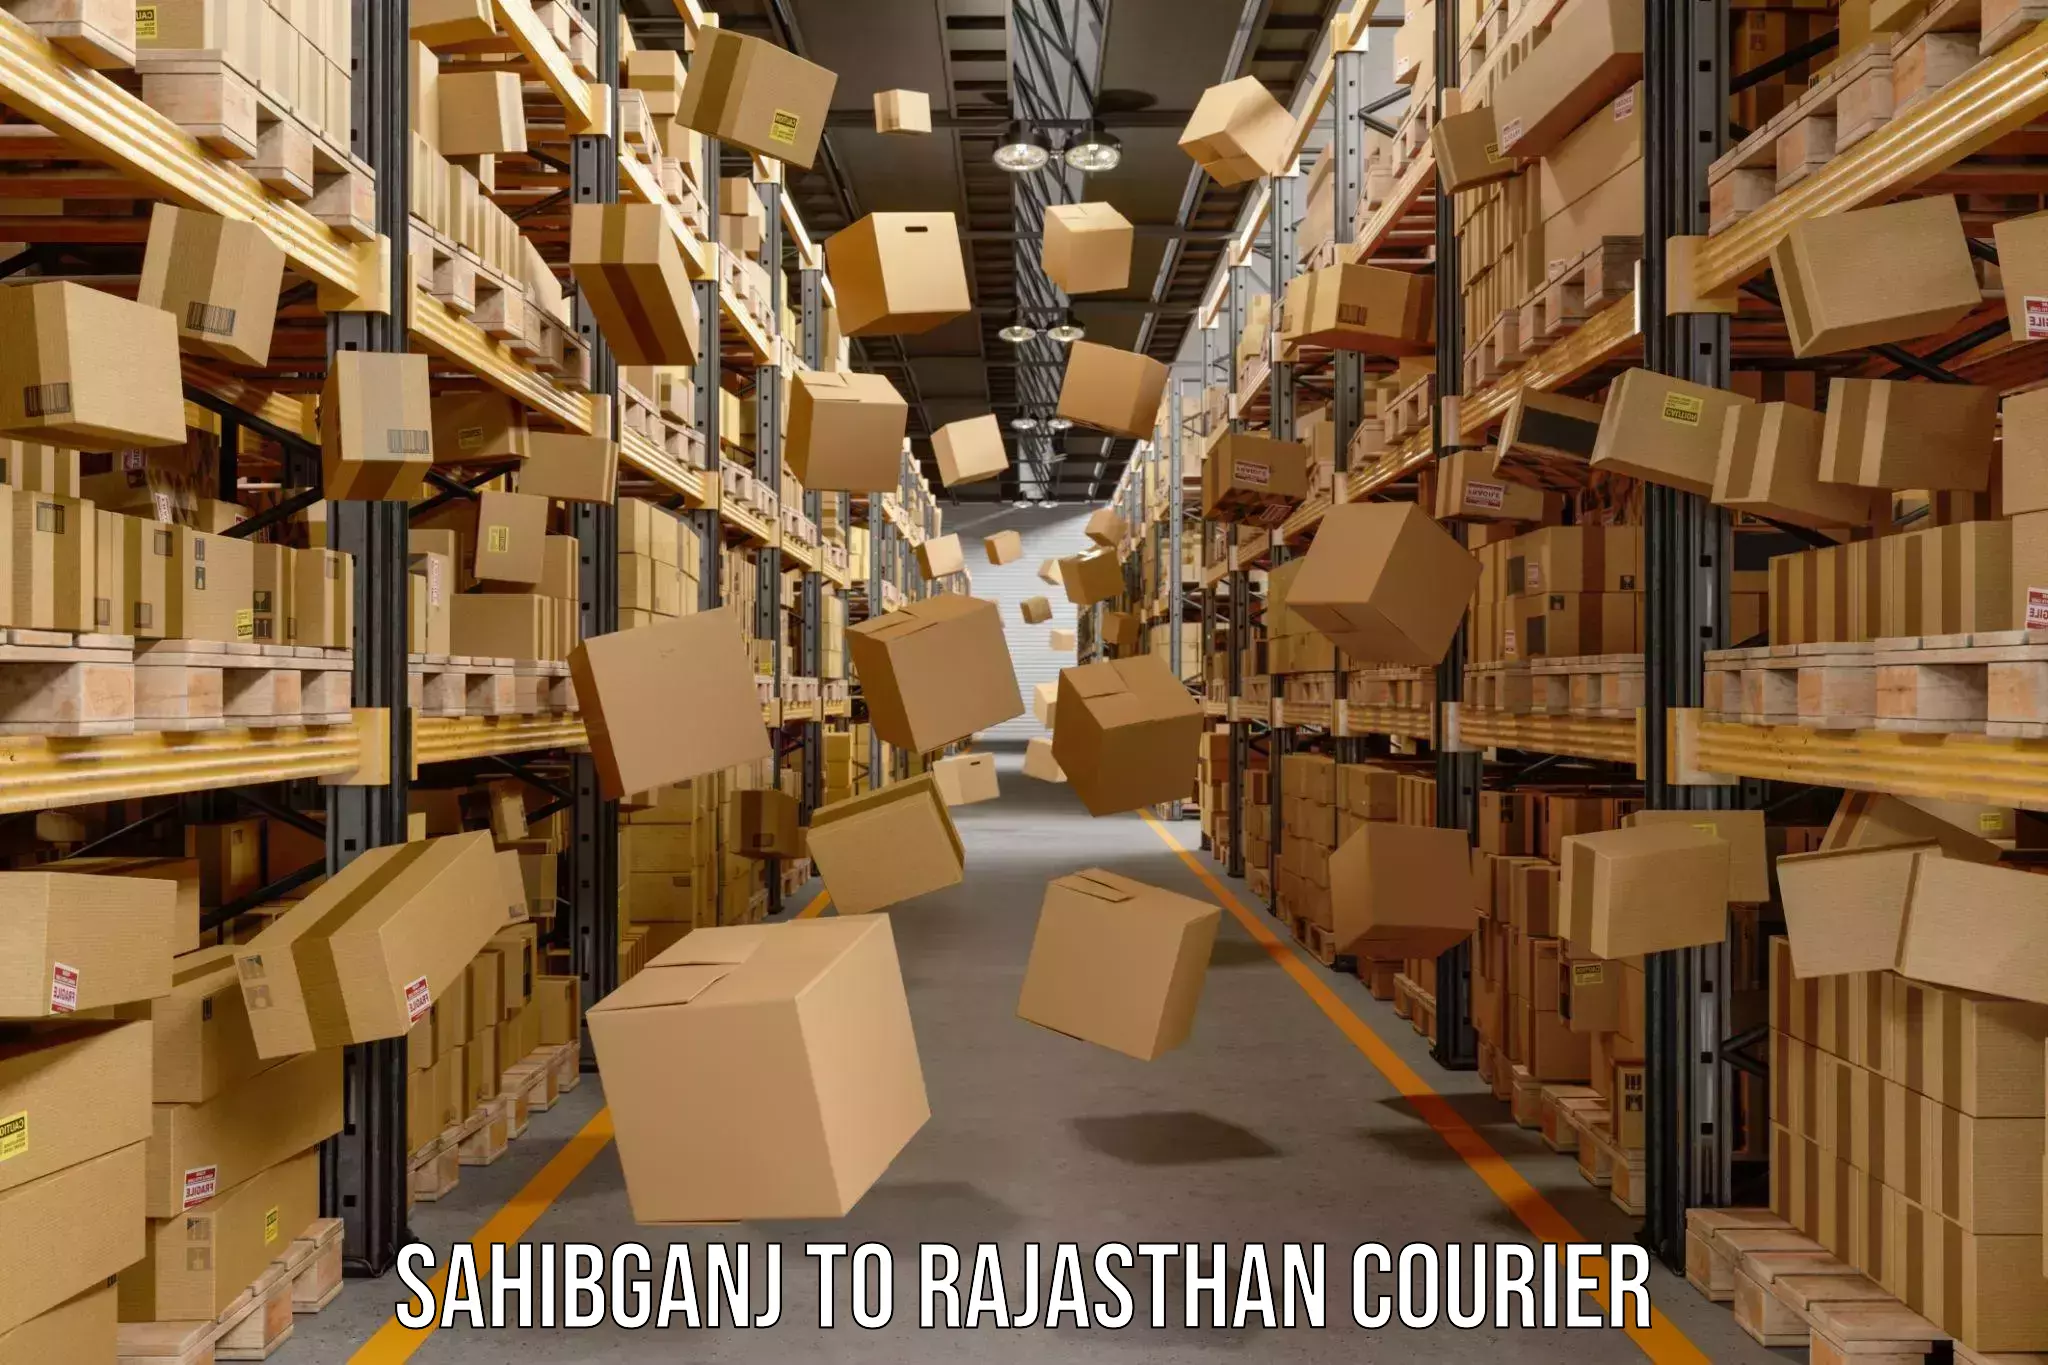 Global logistics network Sahibganj to Rajasthan